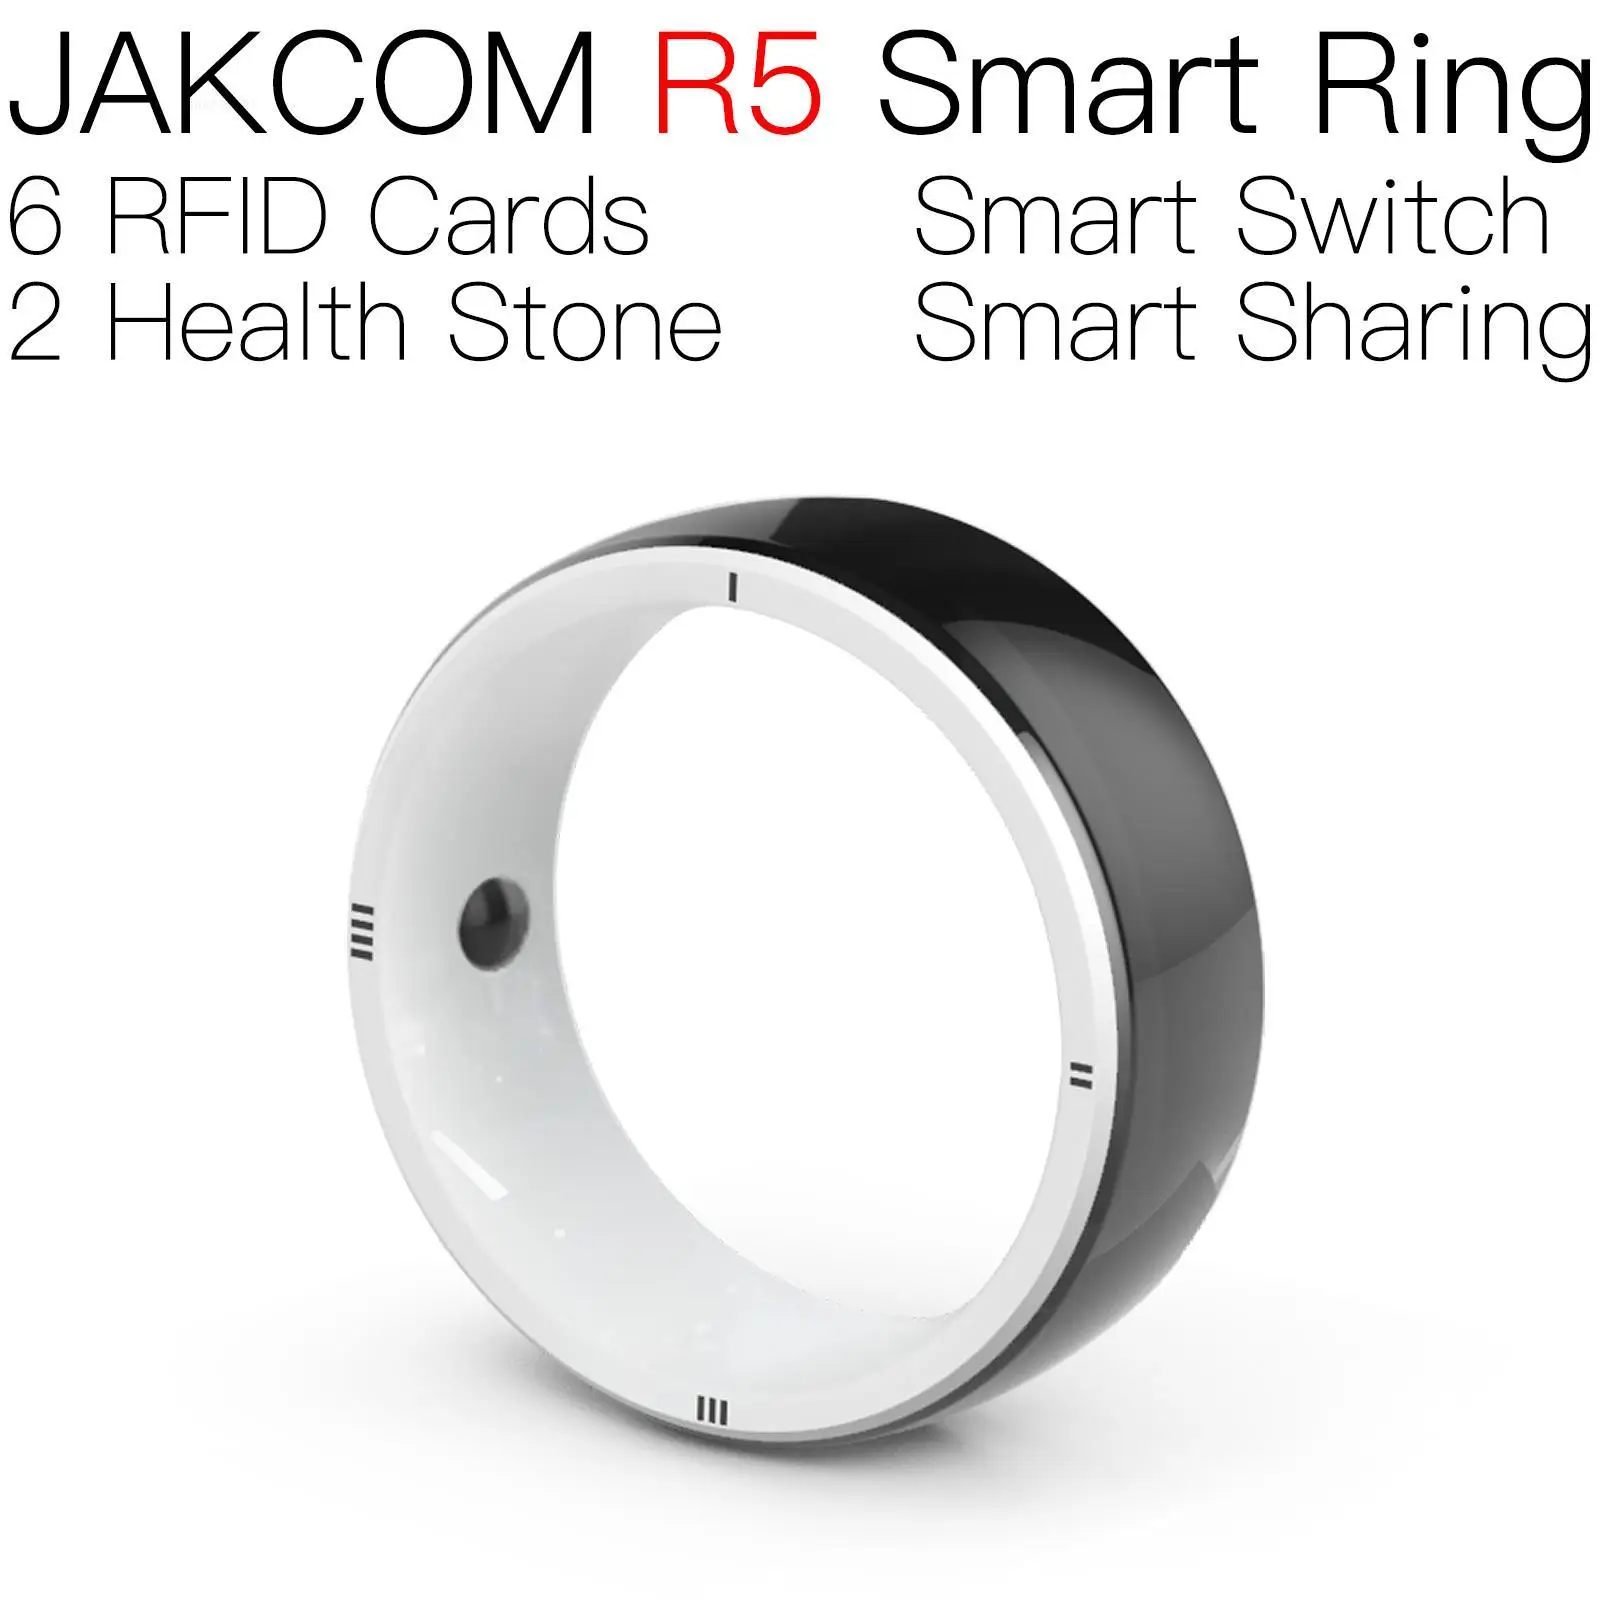 

JAKCOM R5 Smart Ring Nice than nfc tag rewrite rfid uhf 900 card atm shopping 1791570055593 dutch bangla bank videoland premium